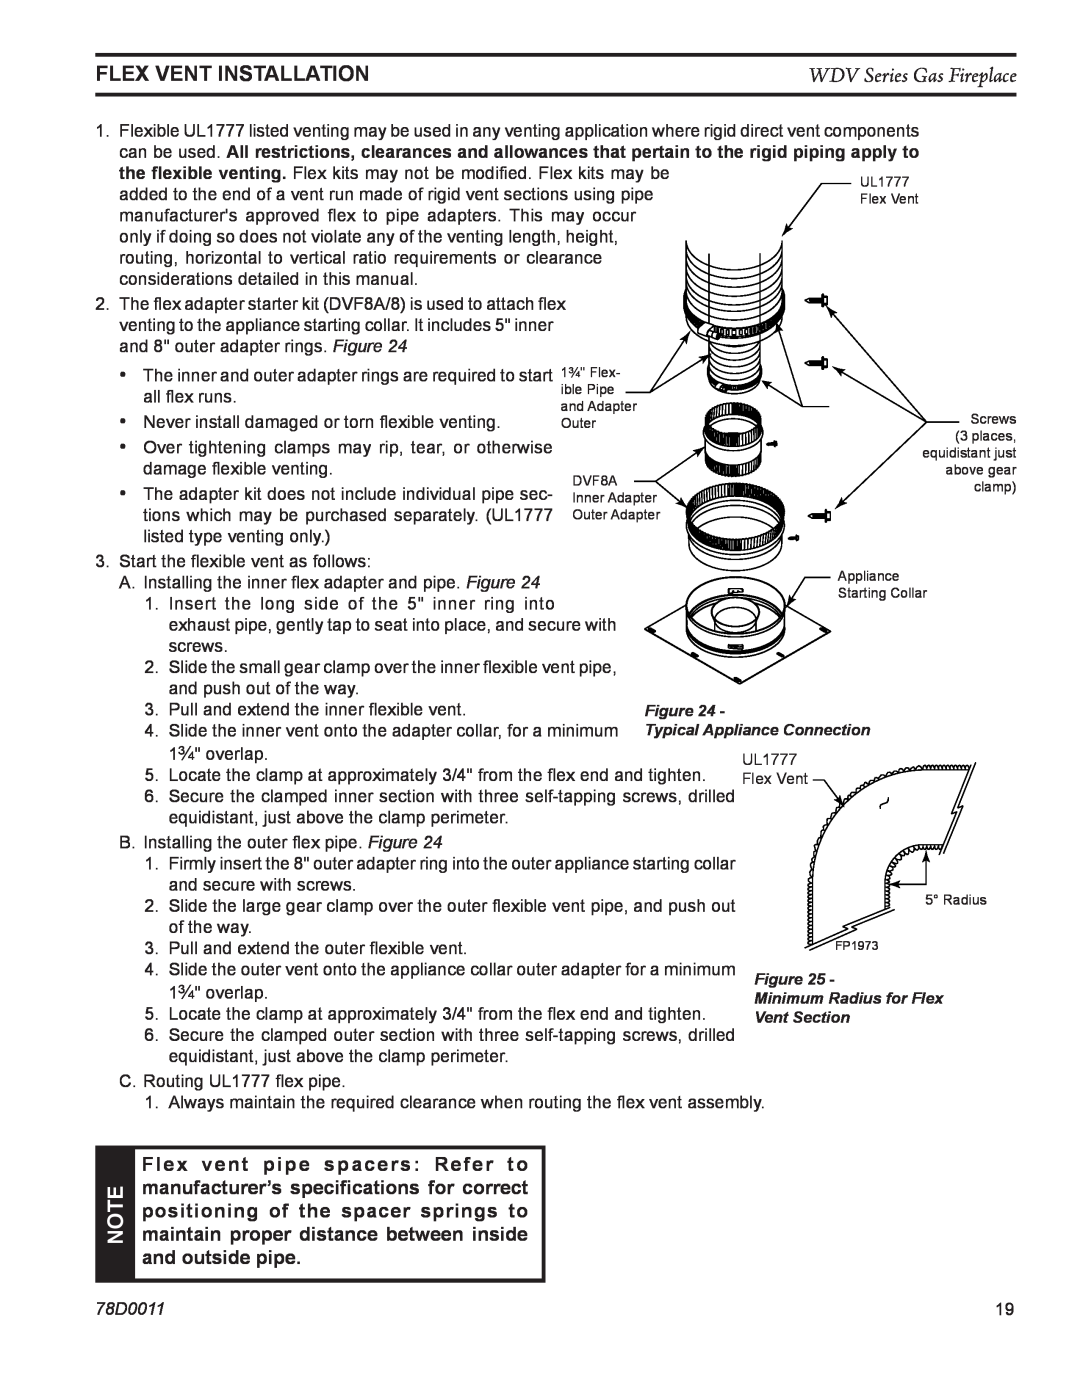 Monessen Hearth WDV500 manual Flex Vent Installation, WDV Series Gas Fireplace, 78D0011 